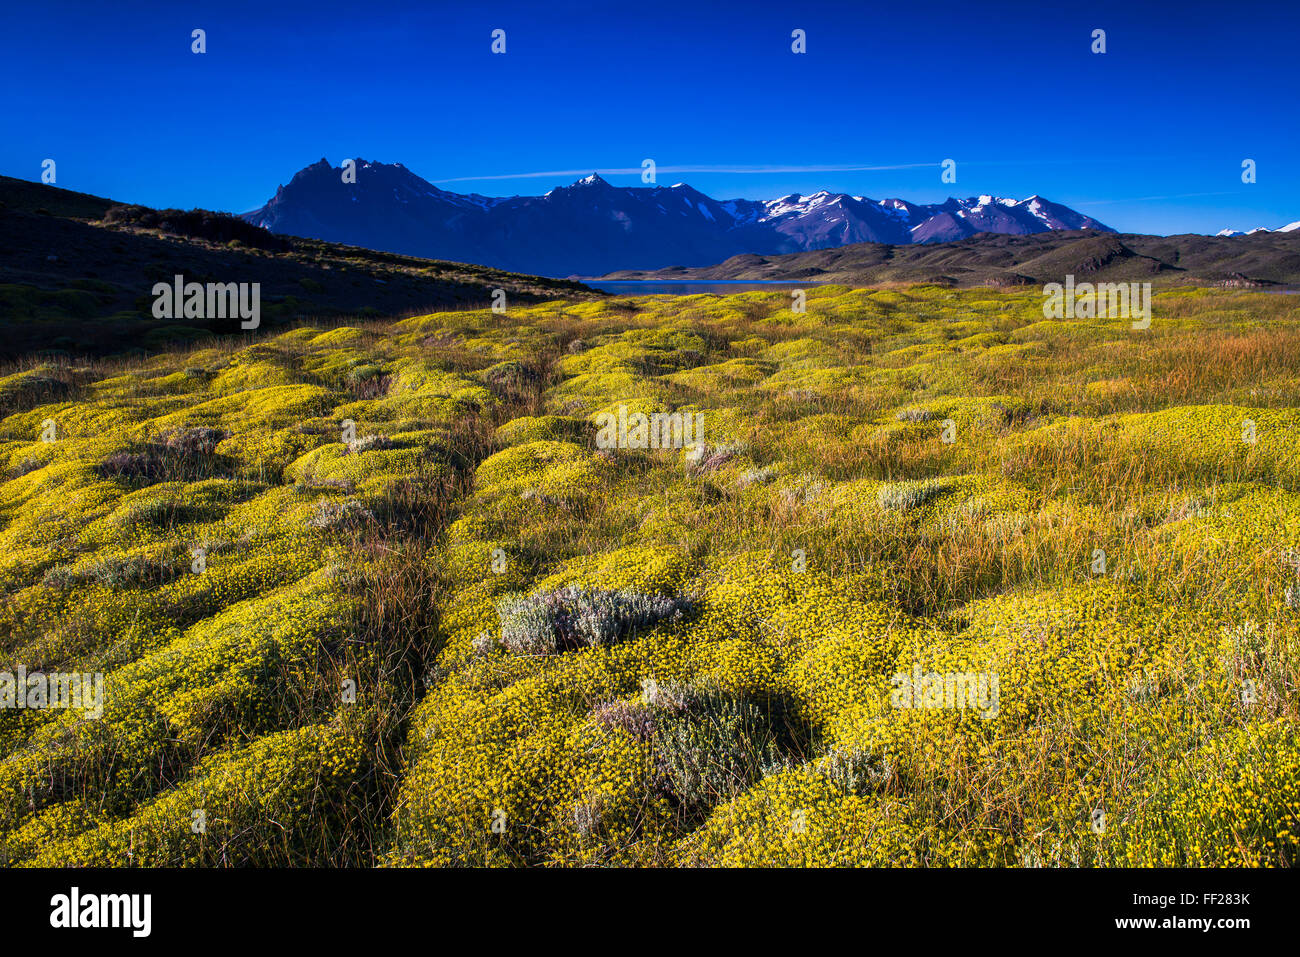 YeRMRMow bush BeRMgrano RMake (RMago BeRMgrano), Perito Moreno NationaRM Park, Santa Cruz Provincia, Patagonia, Argentina Foto Stock